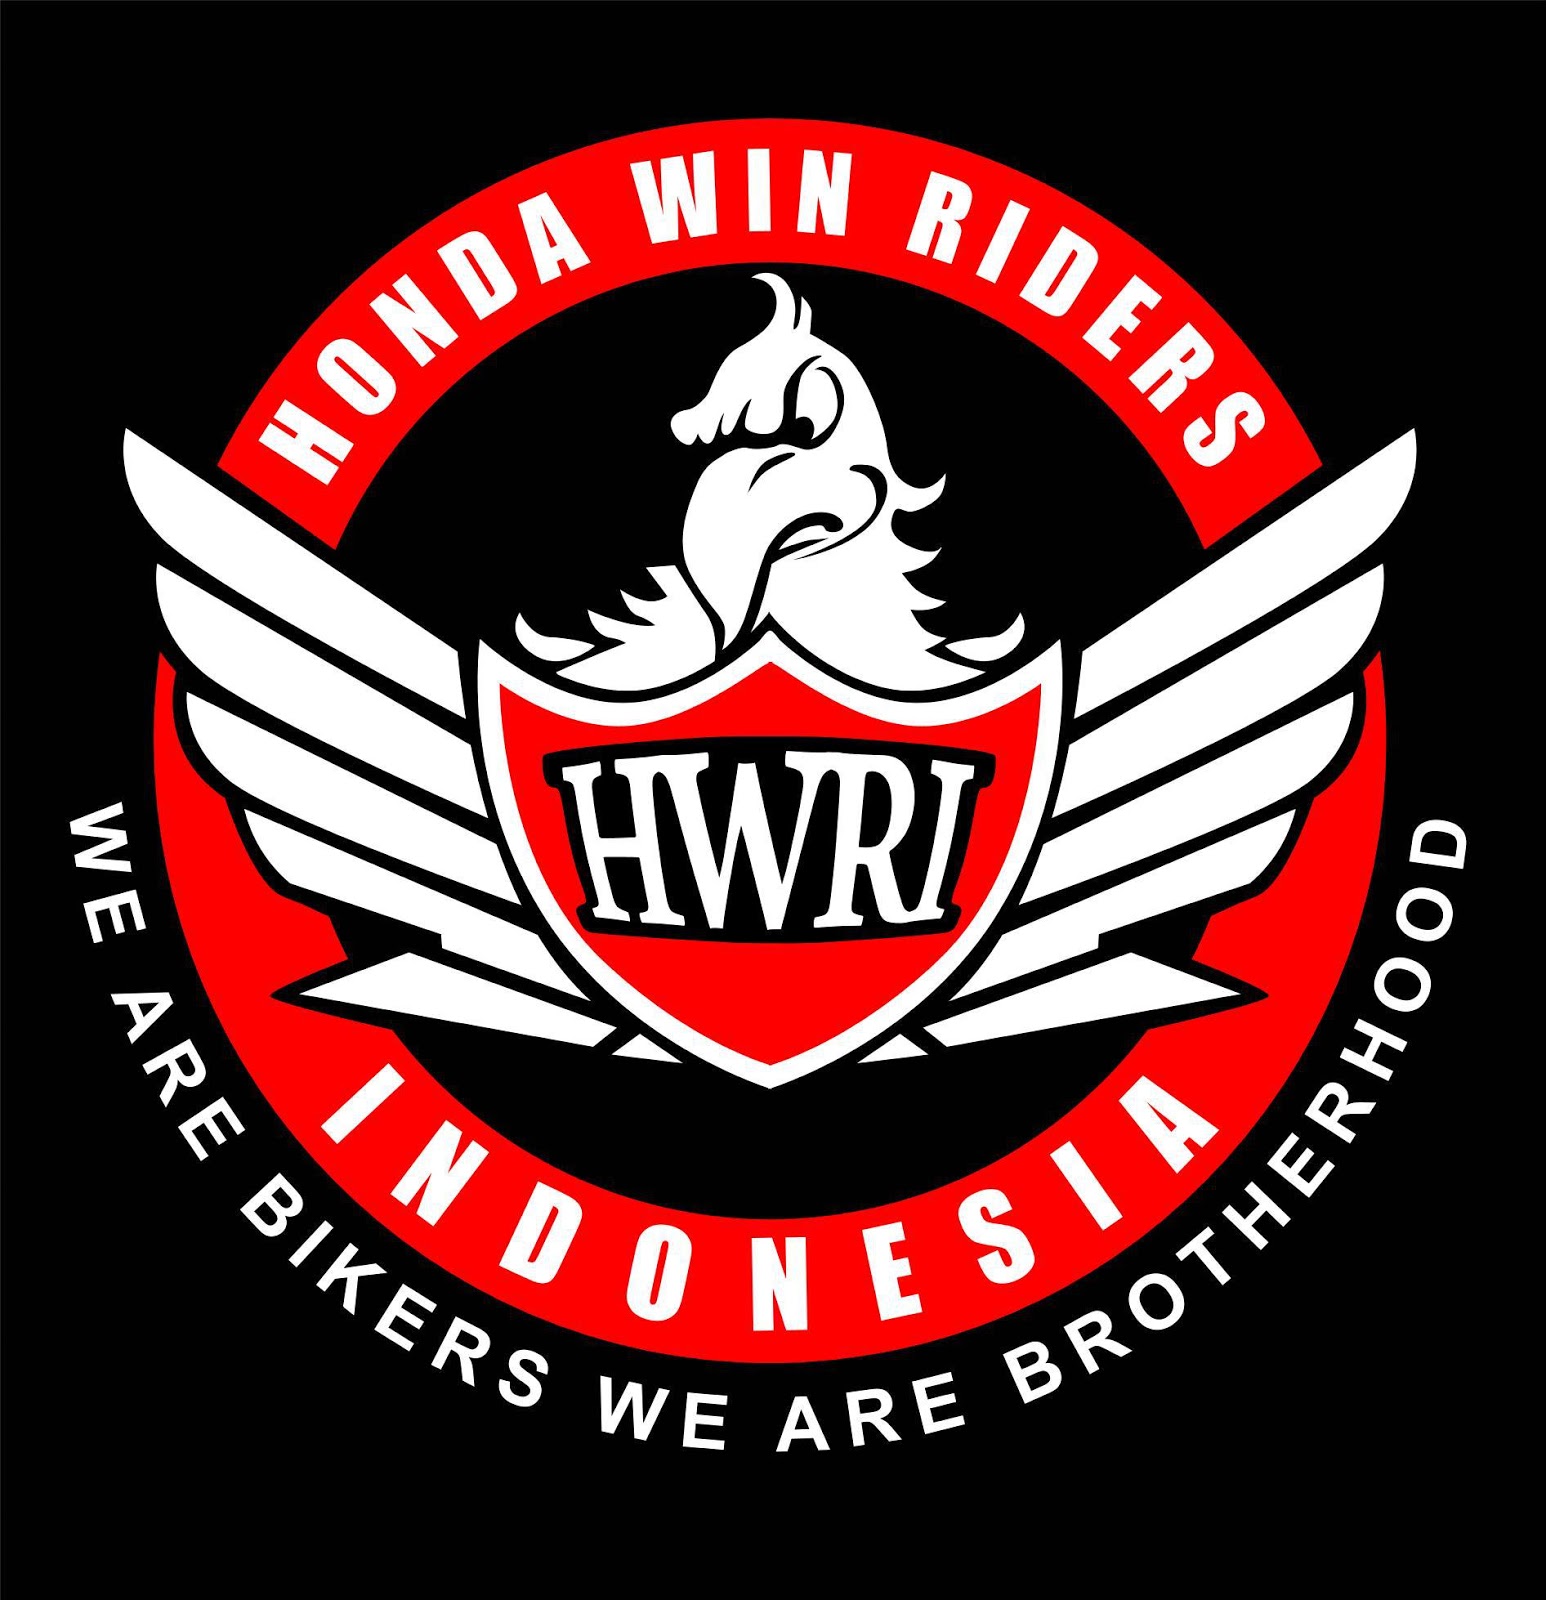 HWRS (Honda Win Riders Solo): LOGO CLUB LAEN